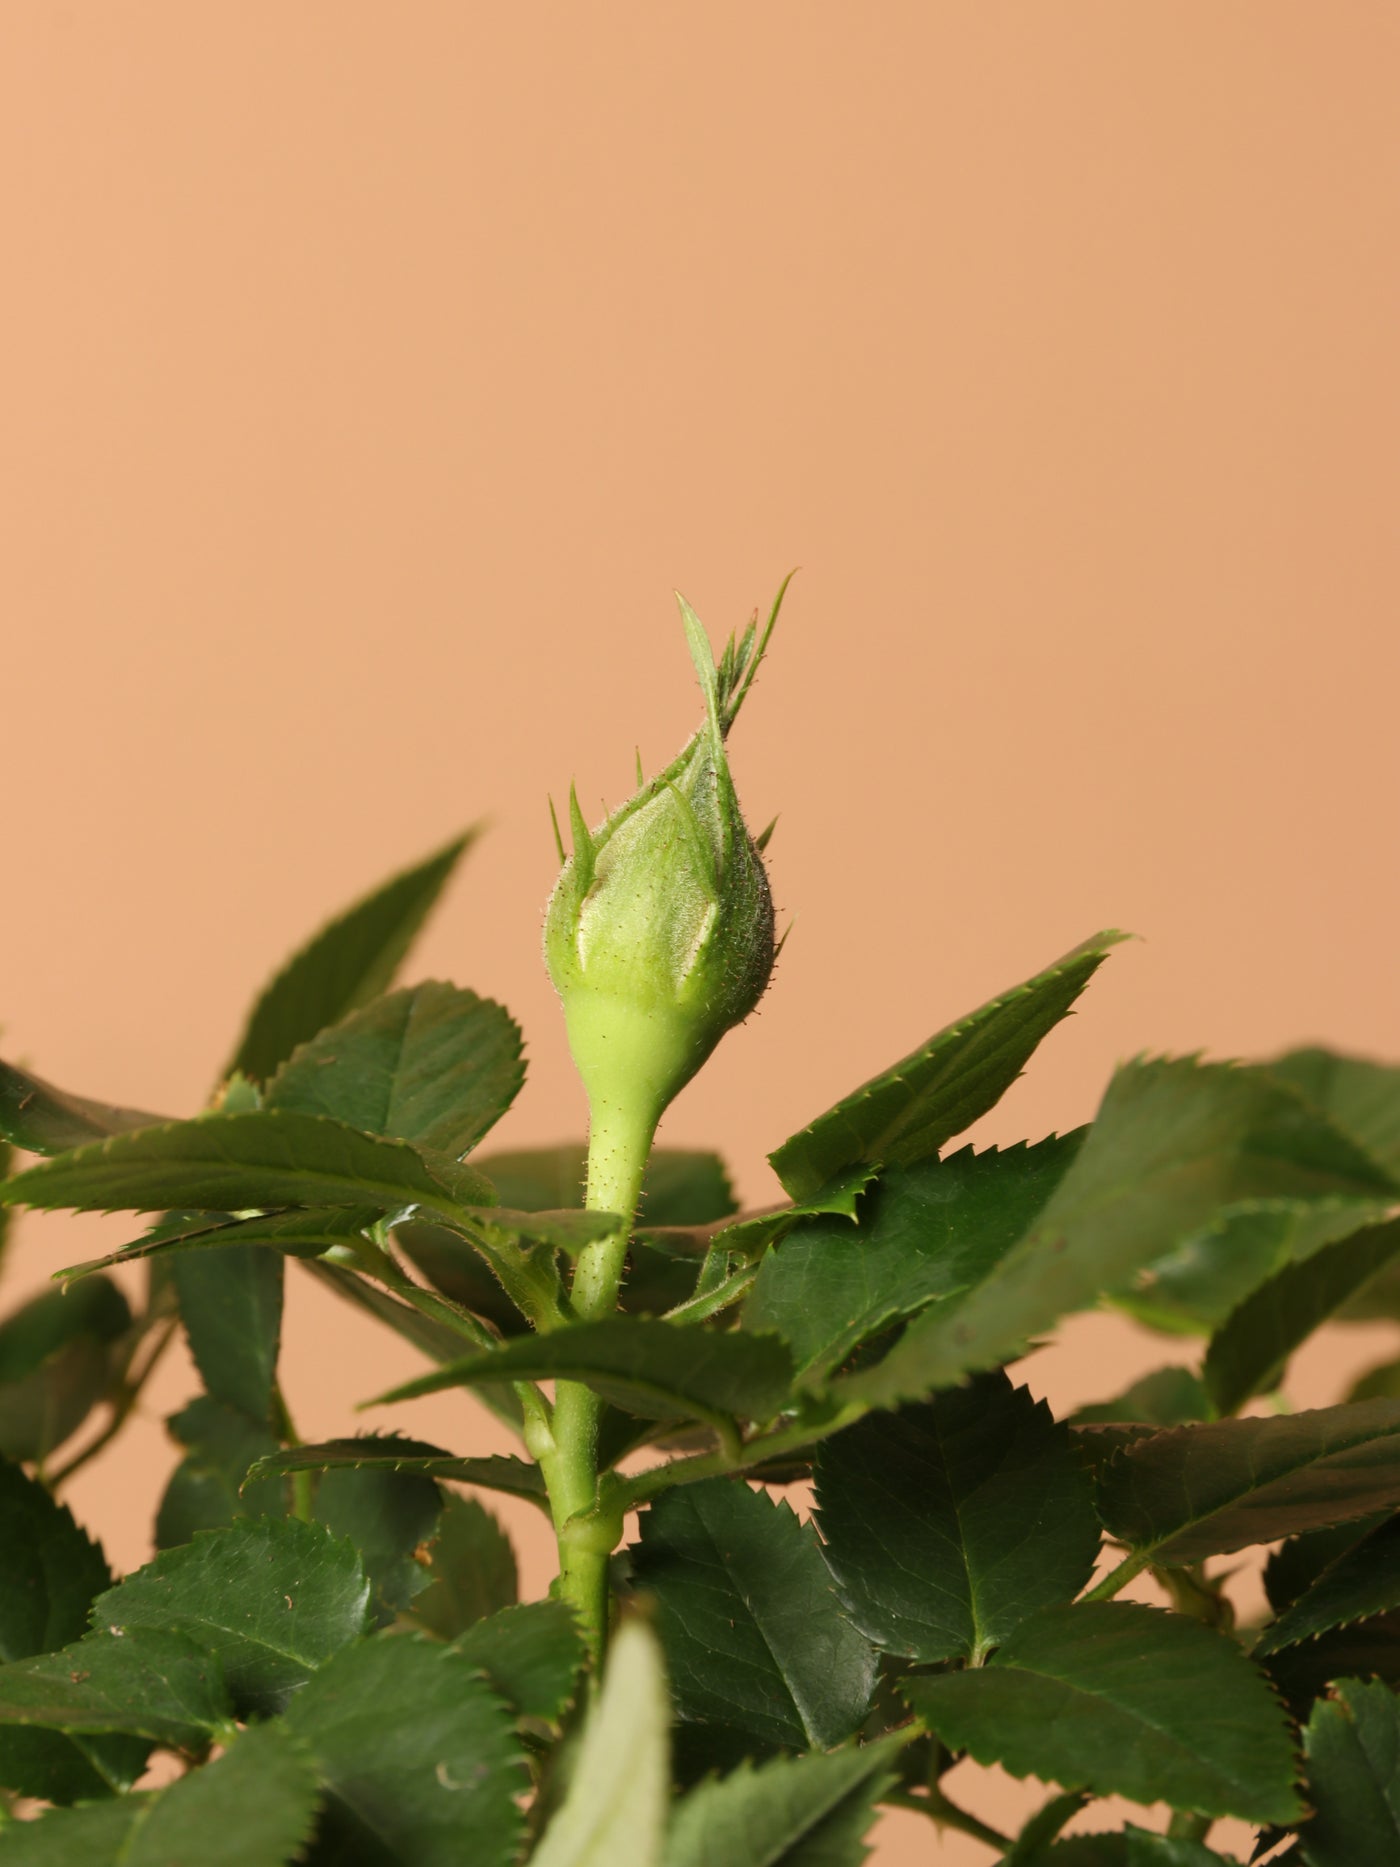 Small Mini Rose (Pink)